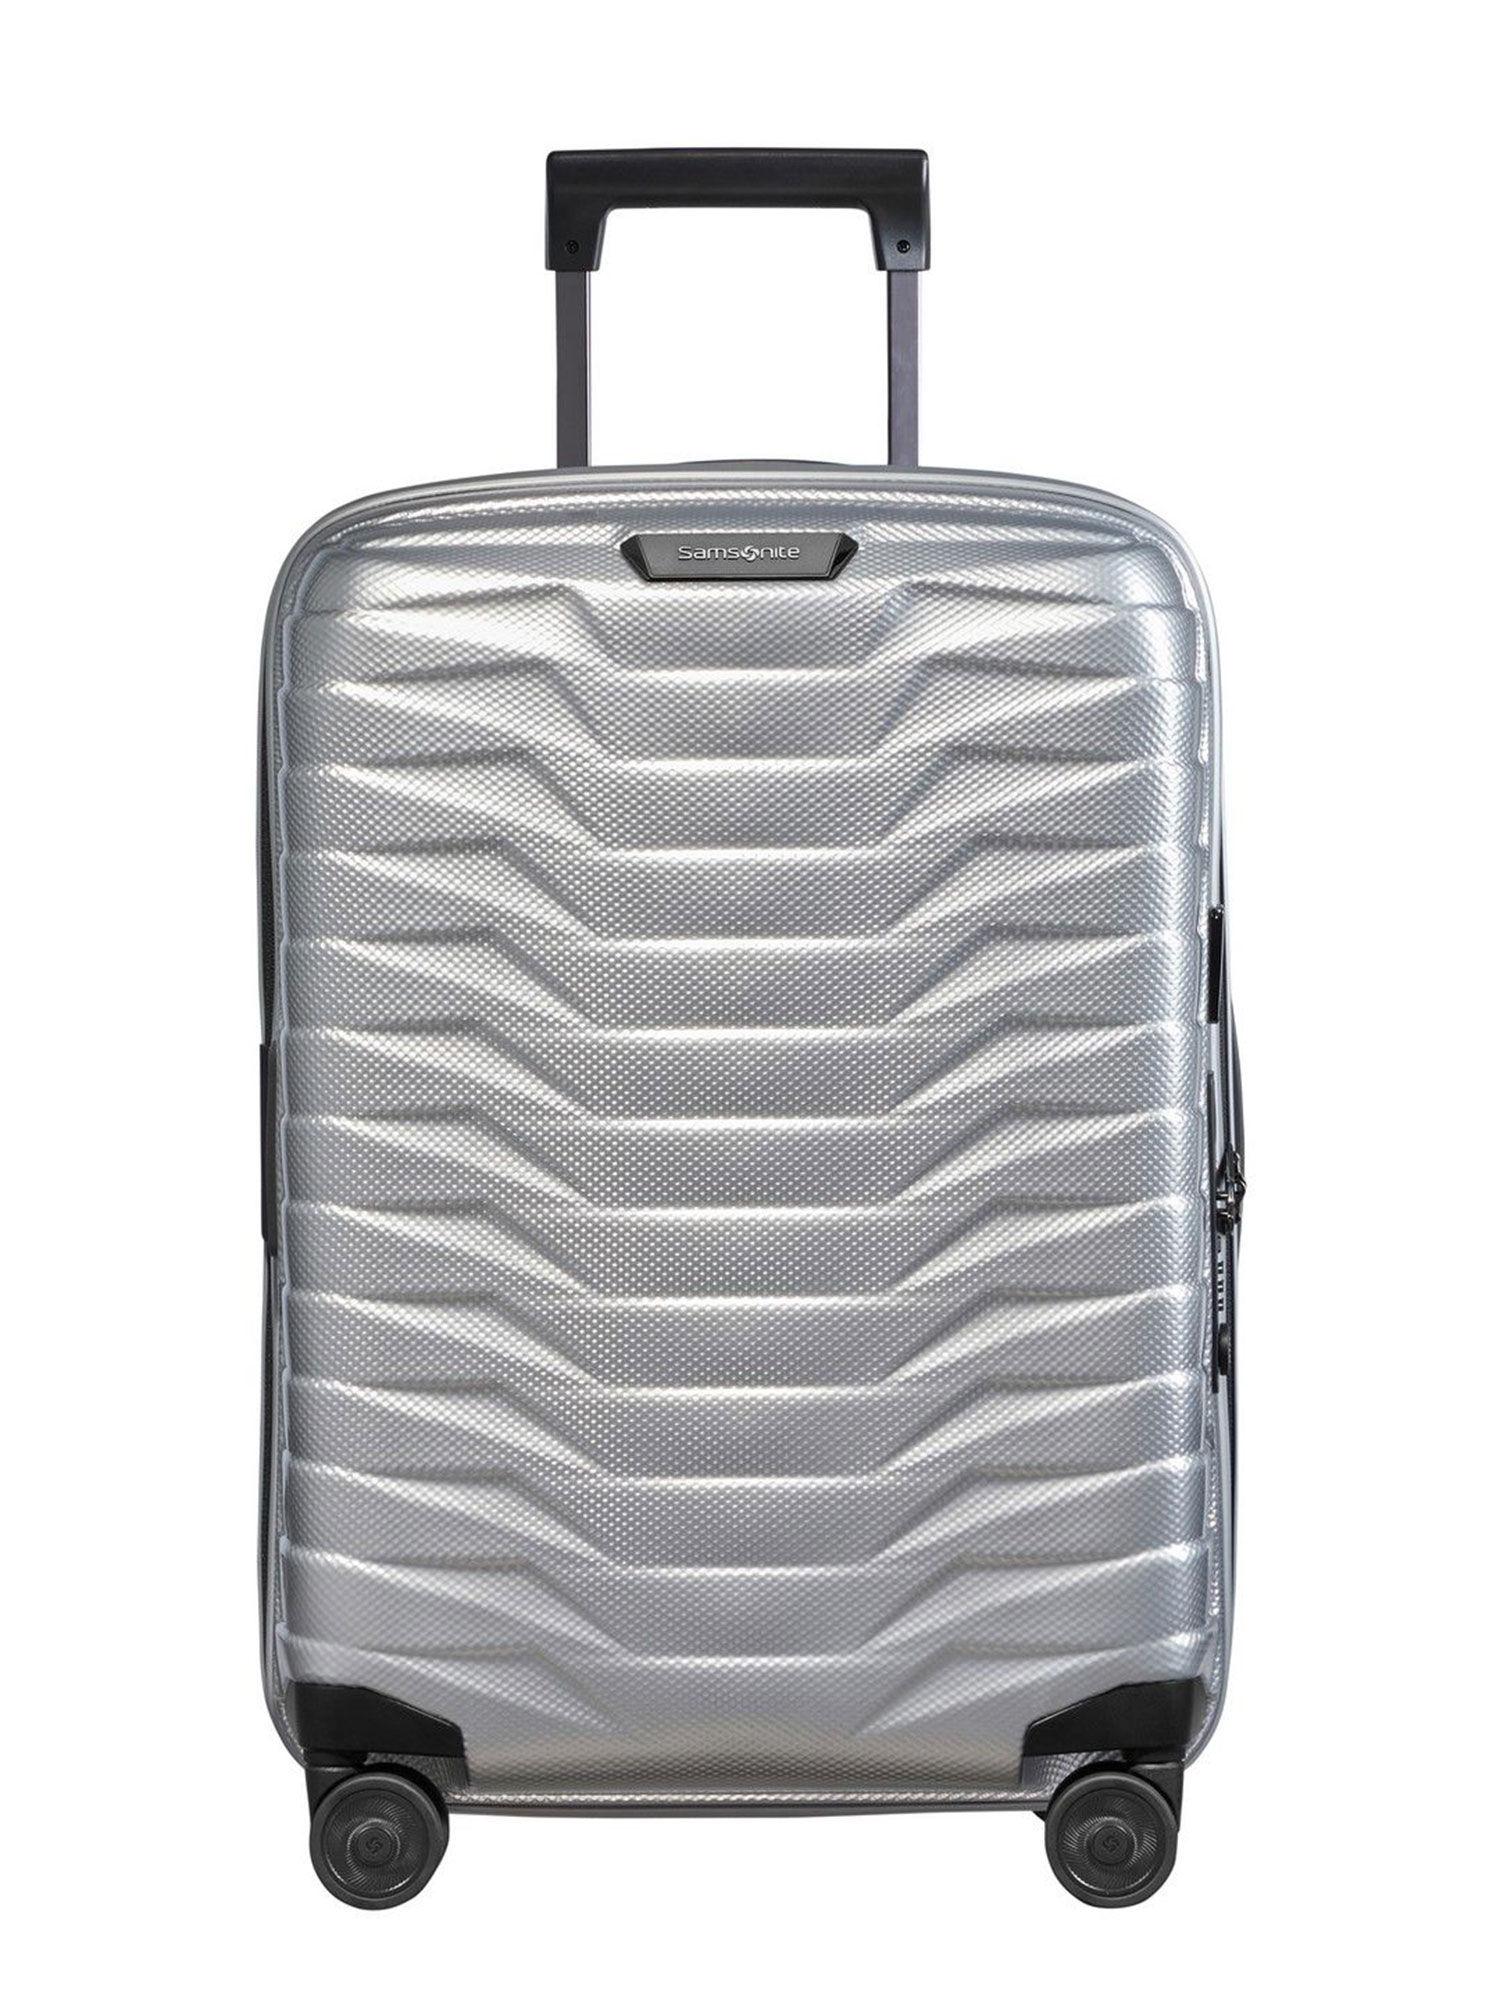 proxies polypropylene hard sided silver luggage bag